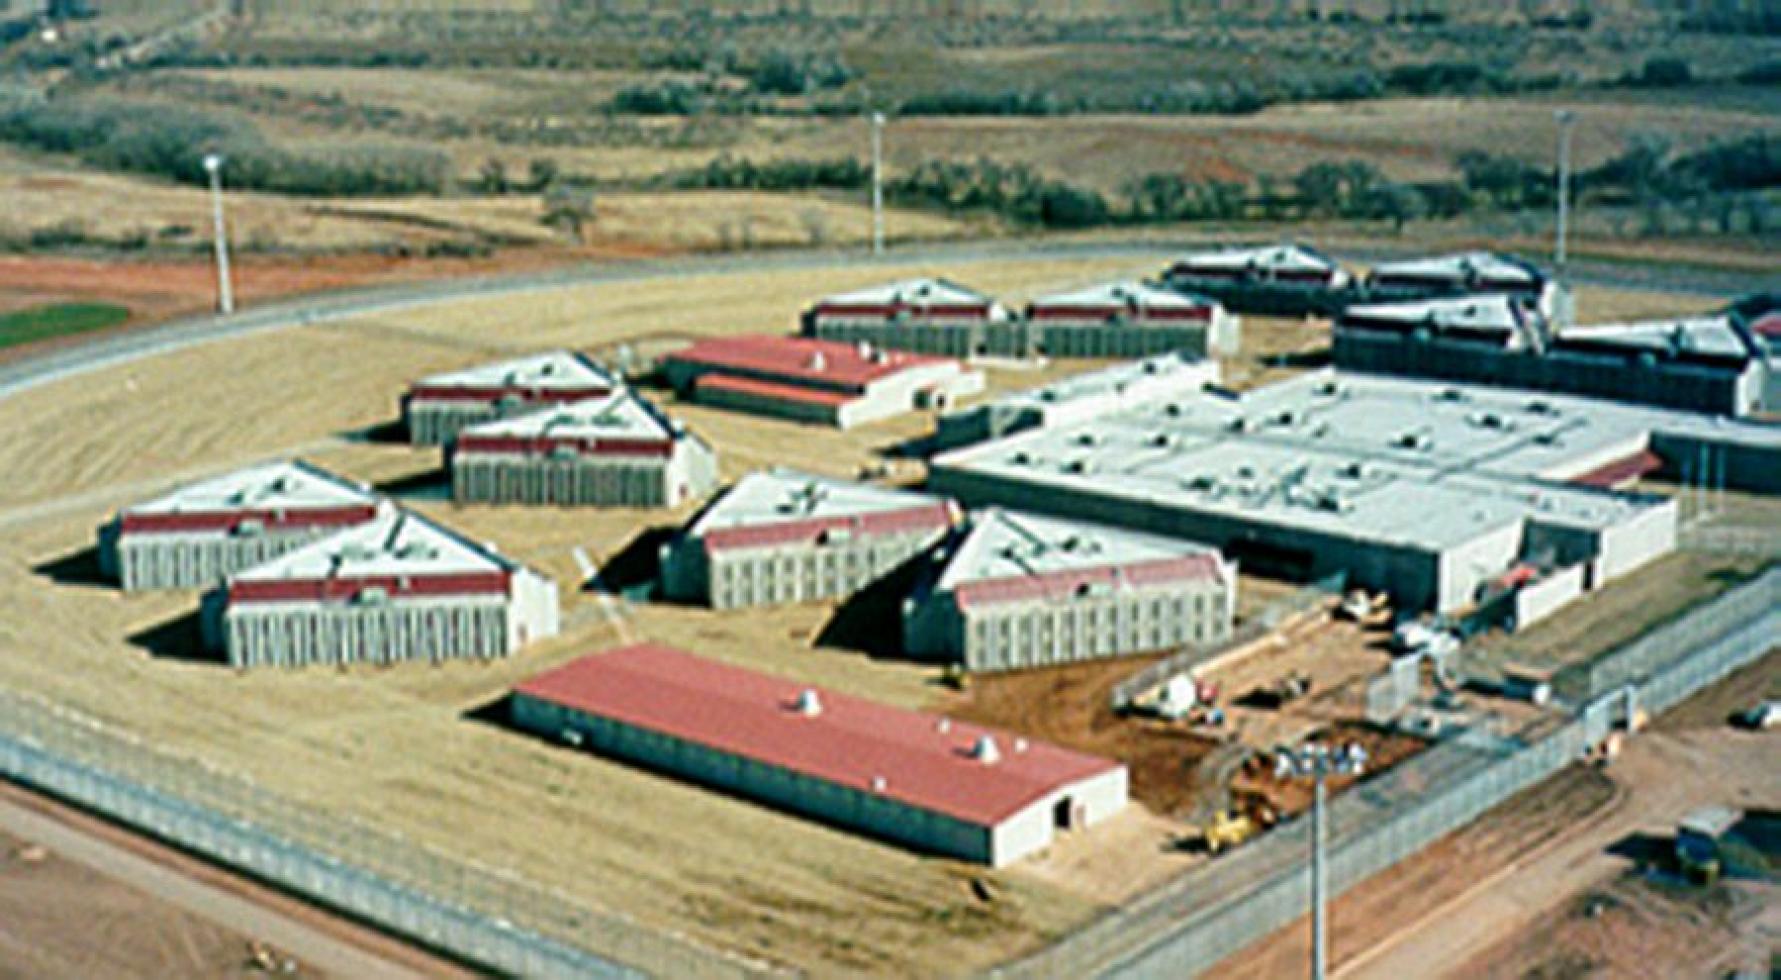 7 Oklahoma prison inmates injured in North Fork disturbance